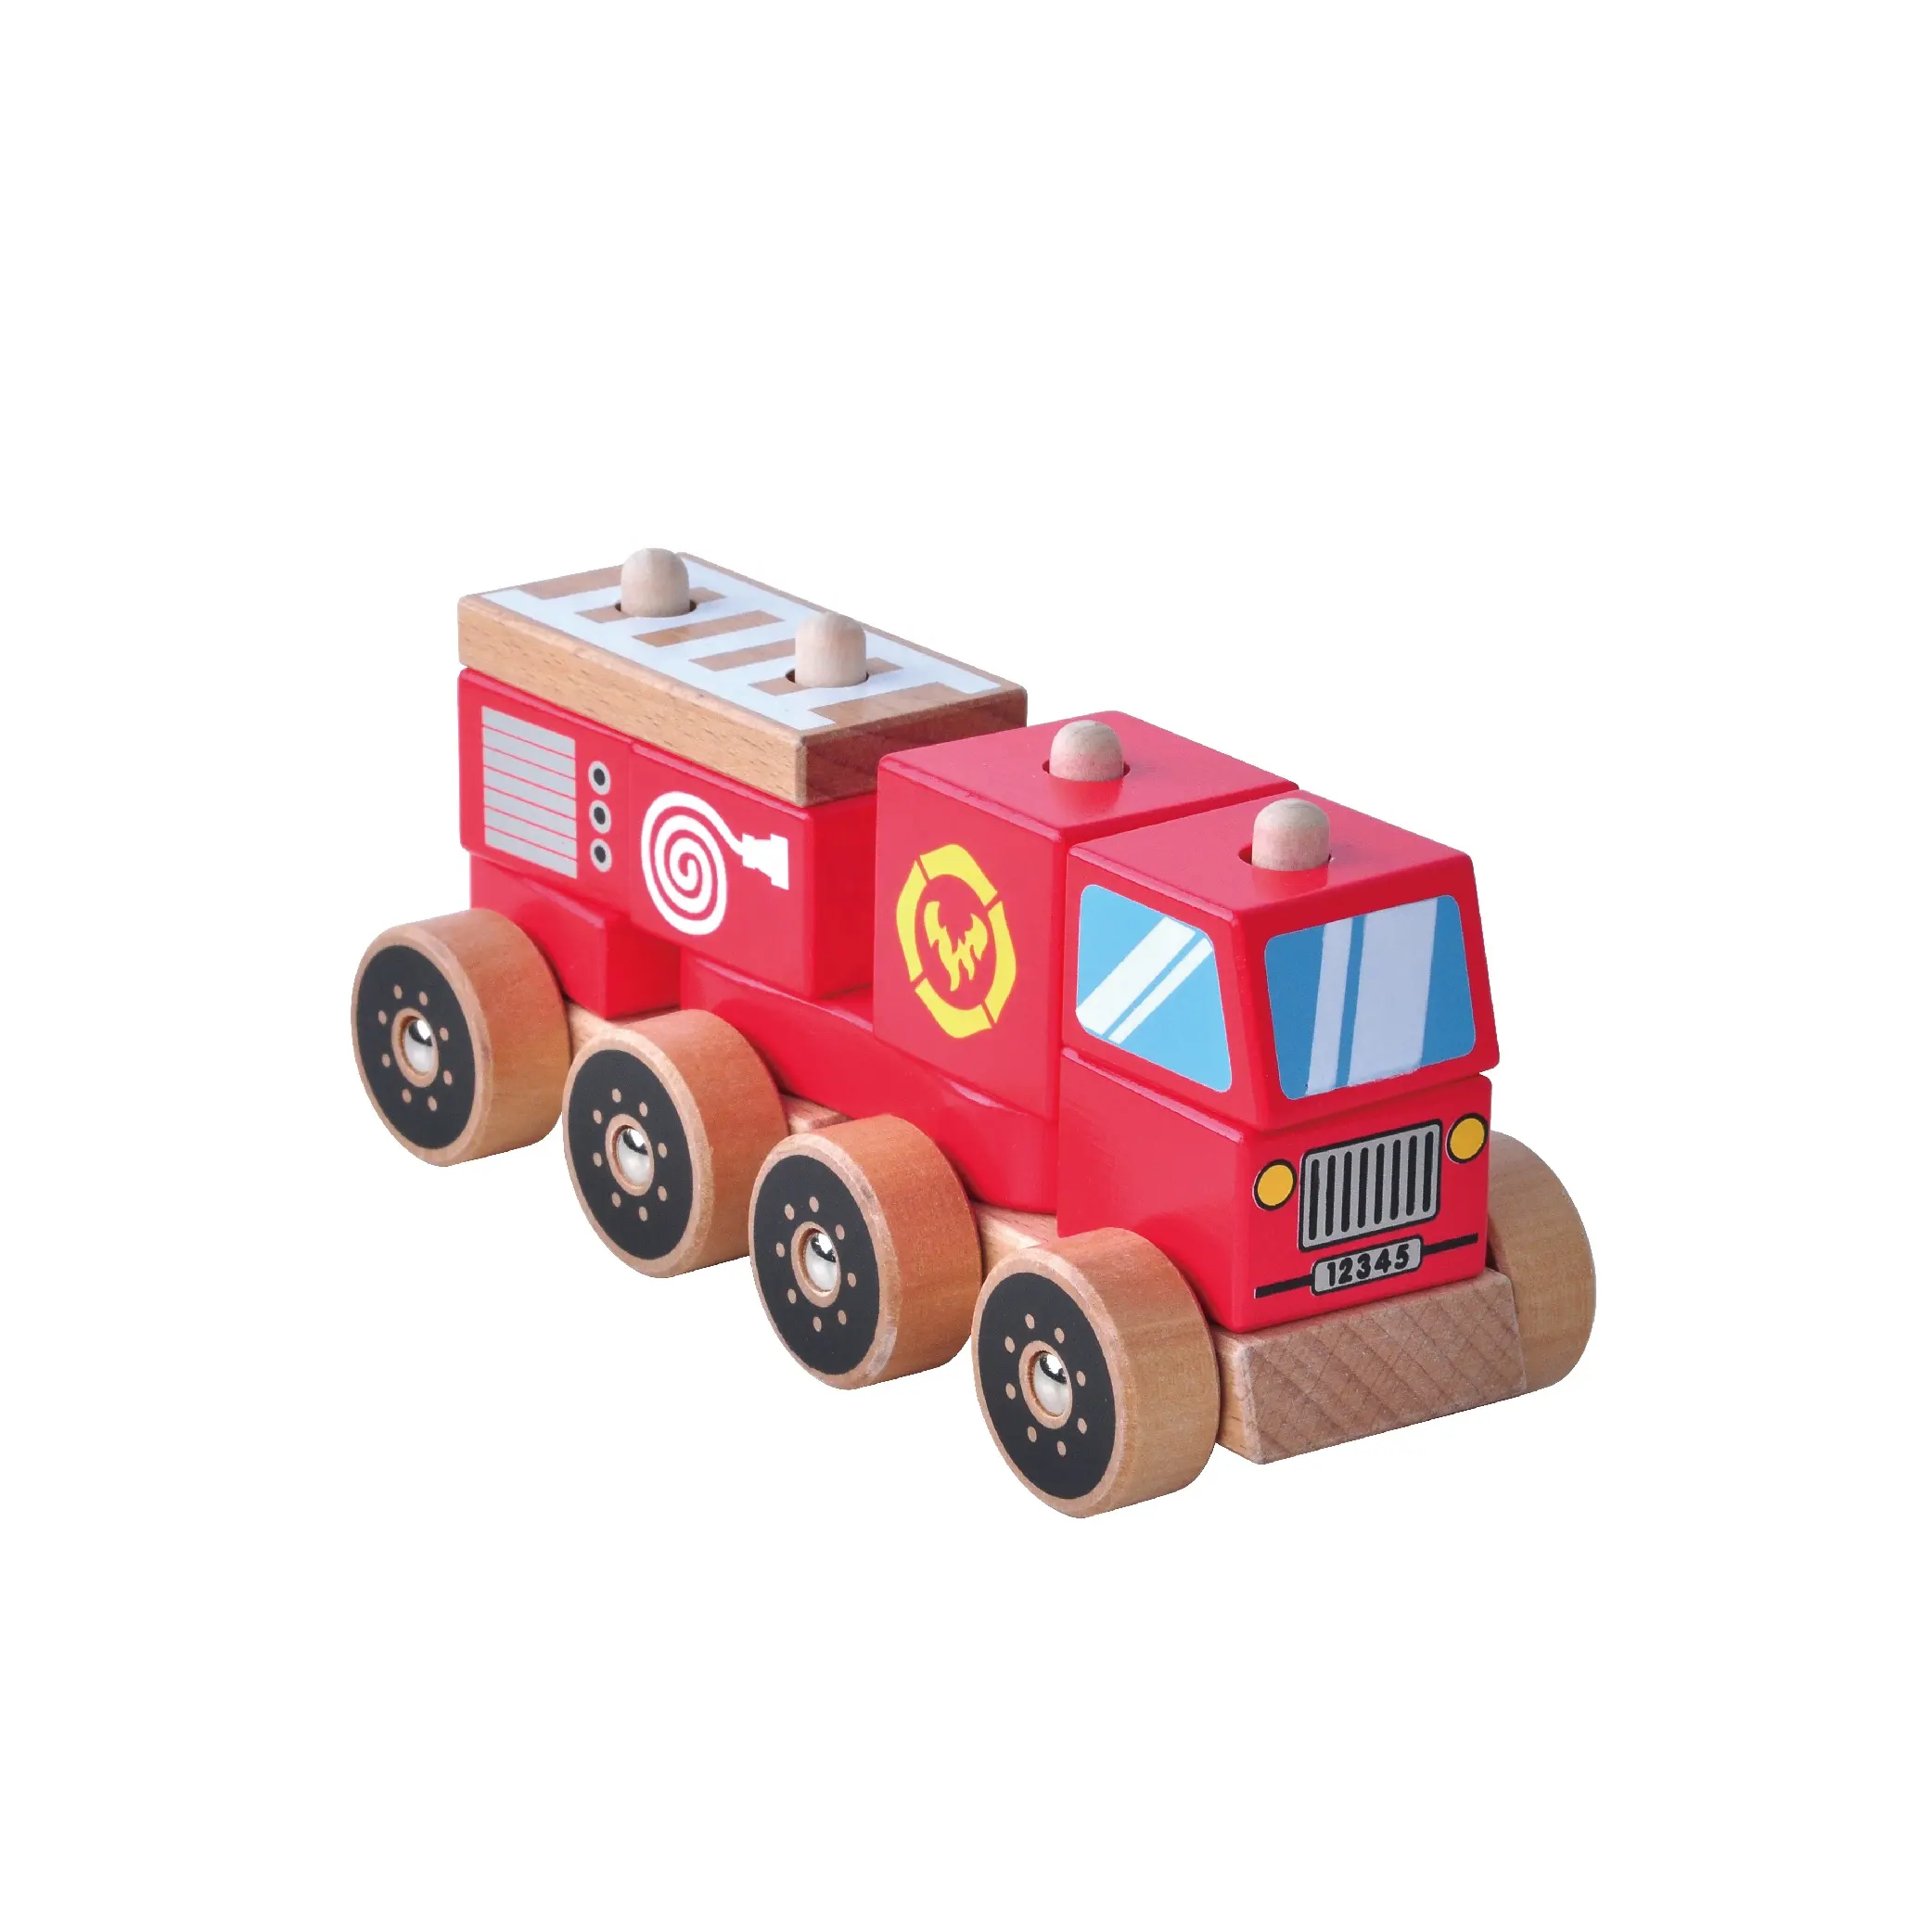 10pcs multifunctional assembly cartoon shape wooden toys building block car wooden train cars